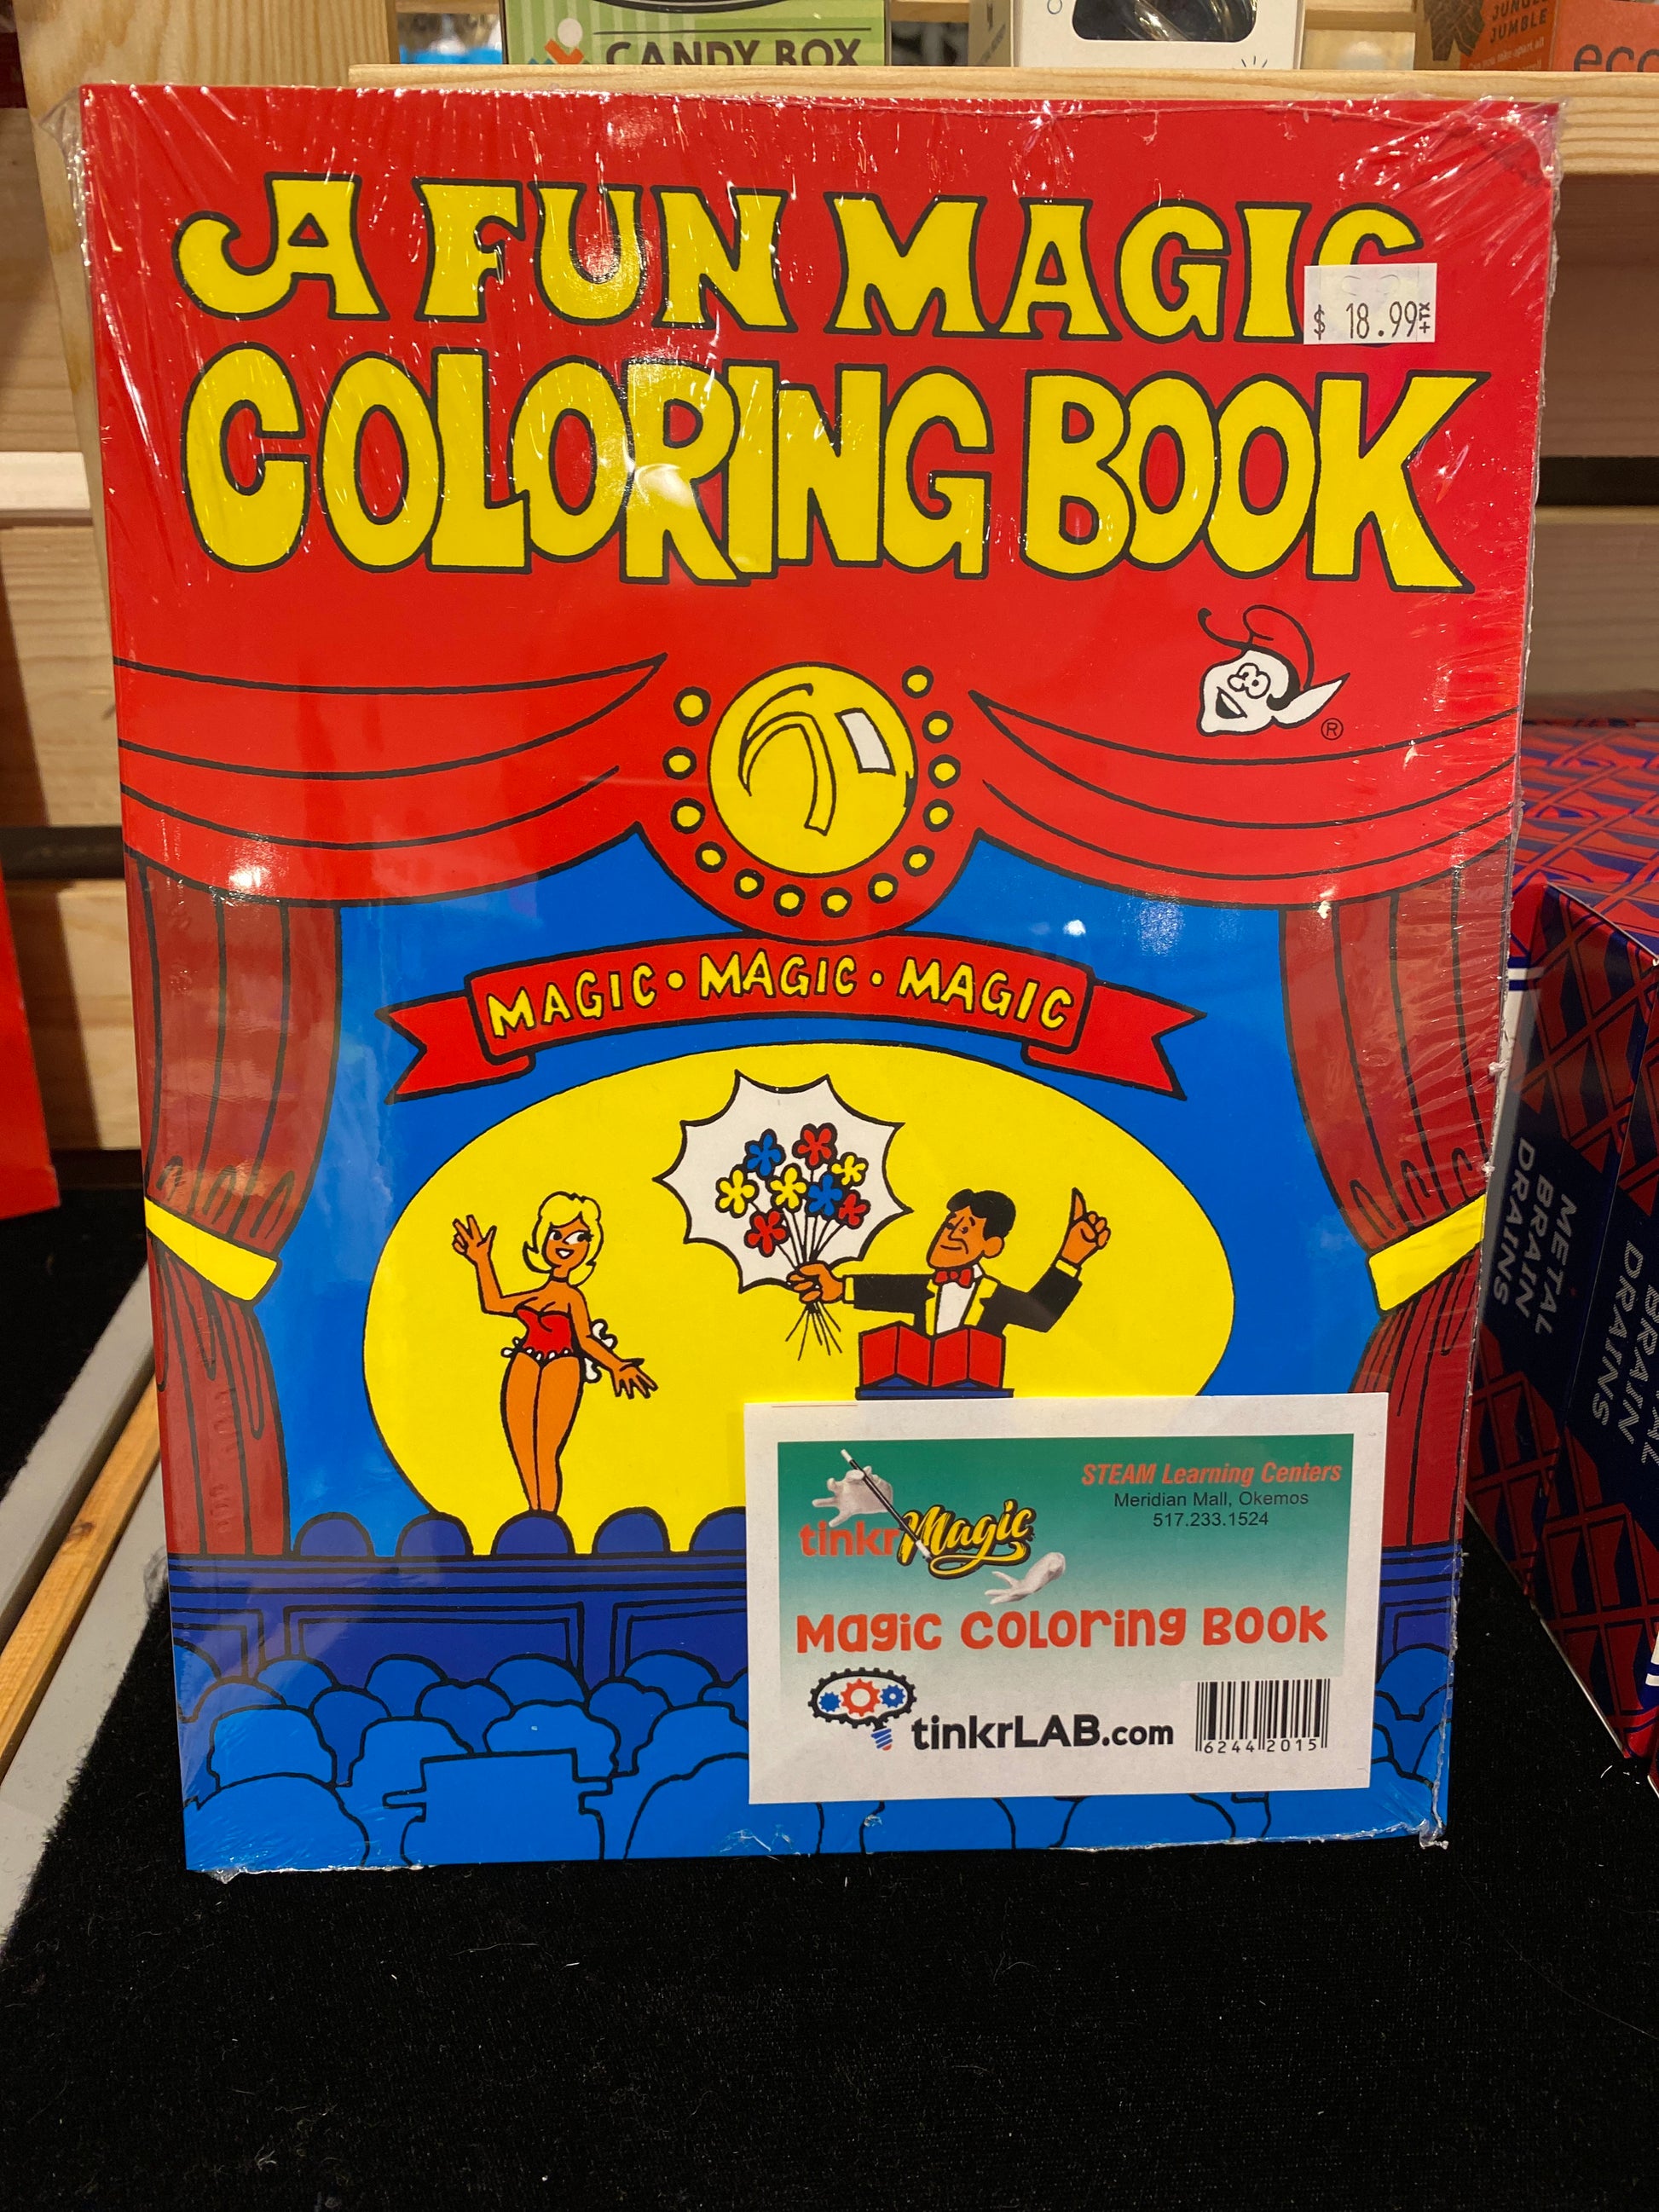 Magic coloring book - tinkrLAB